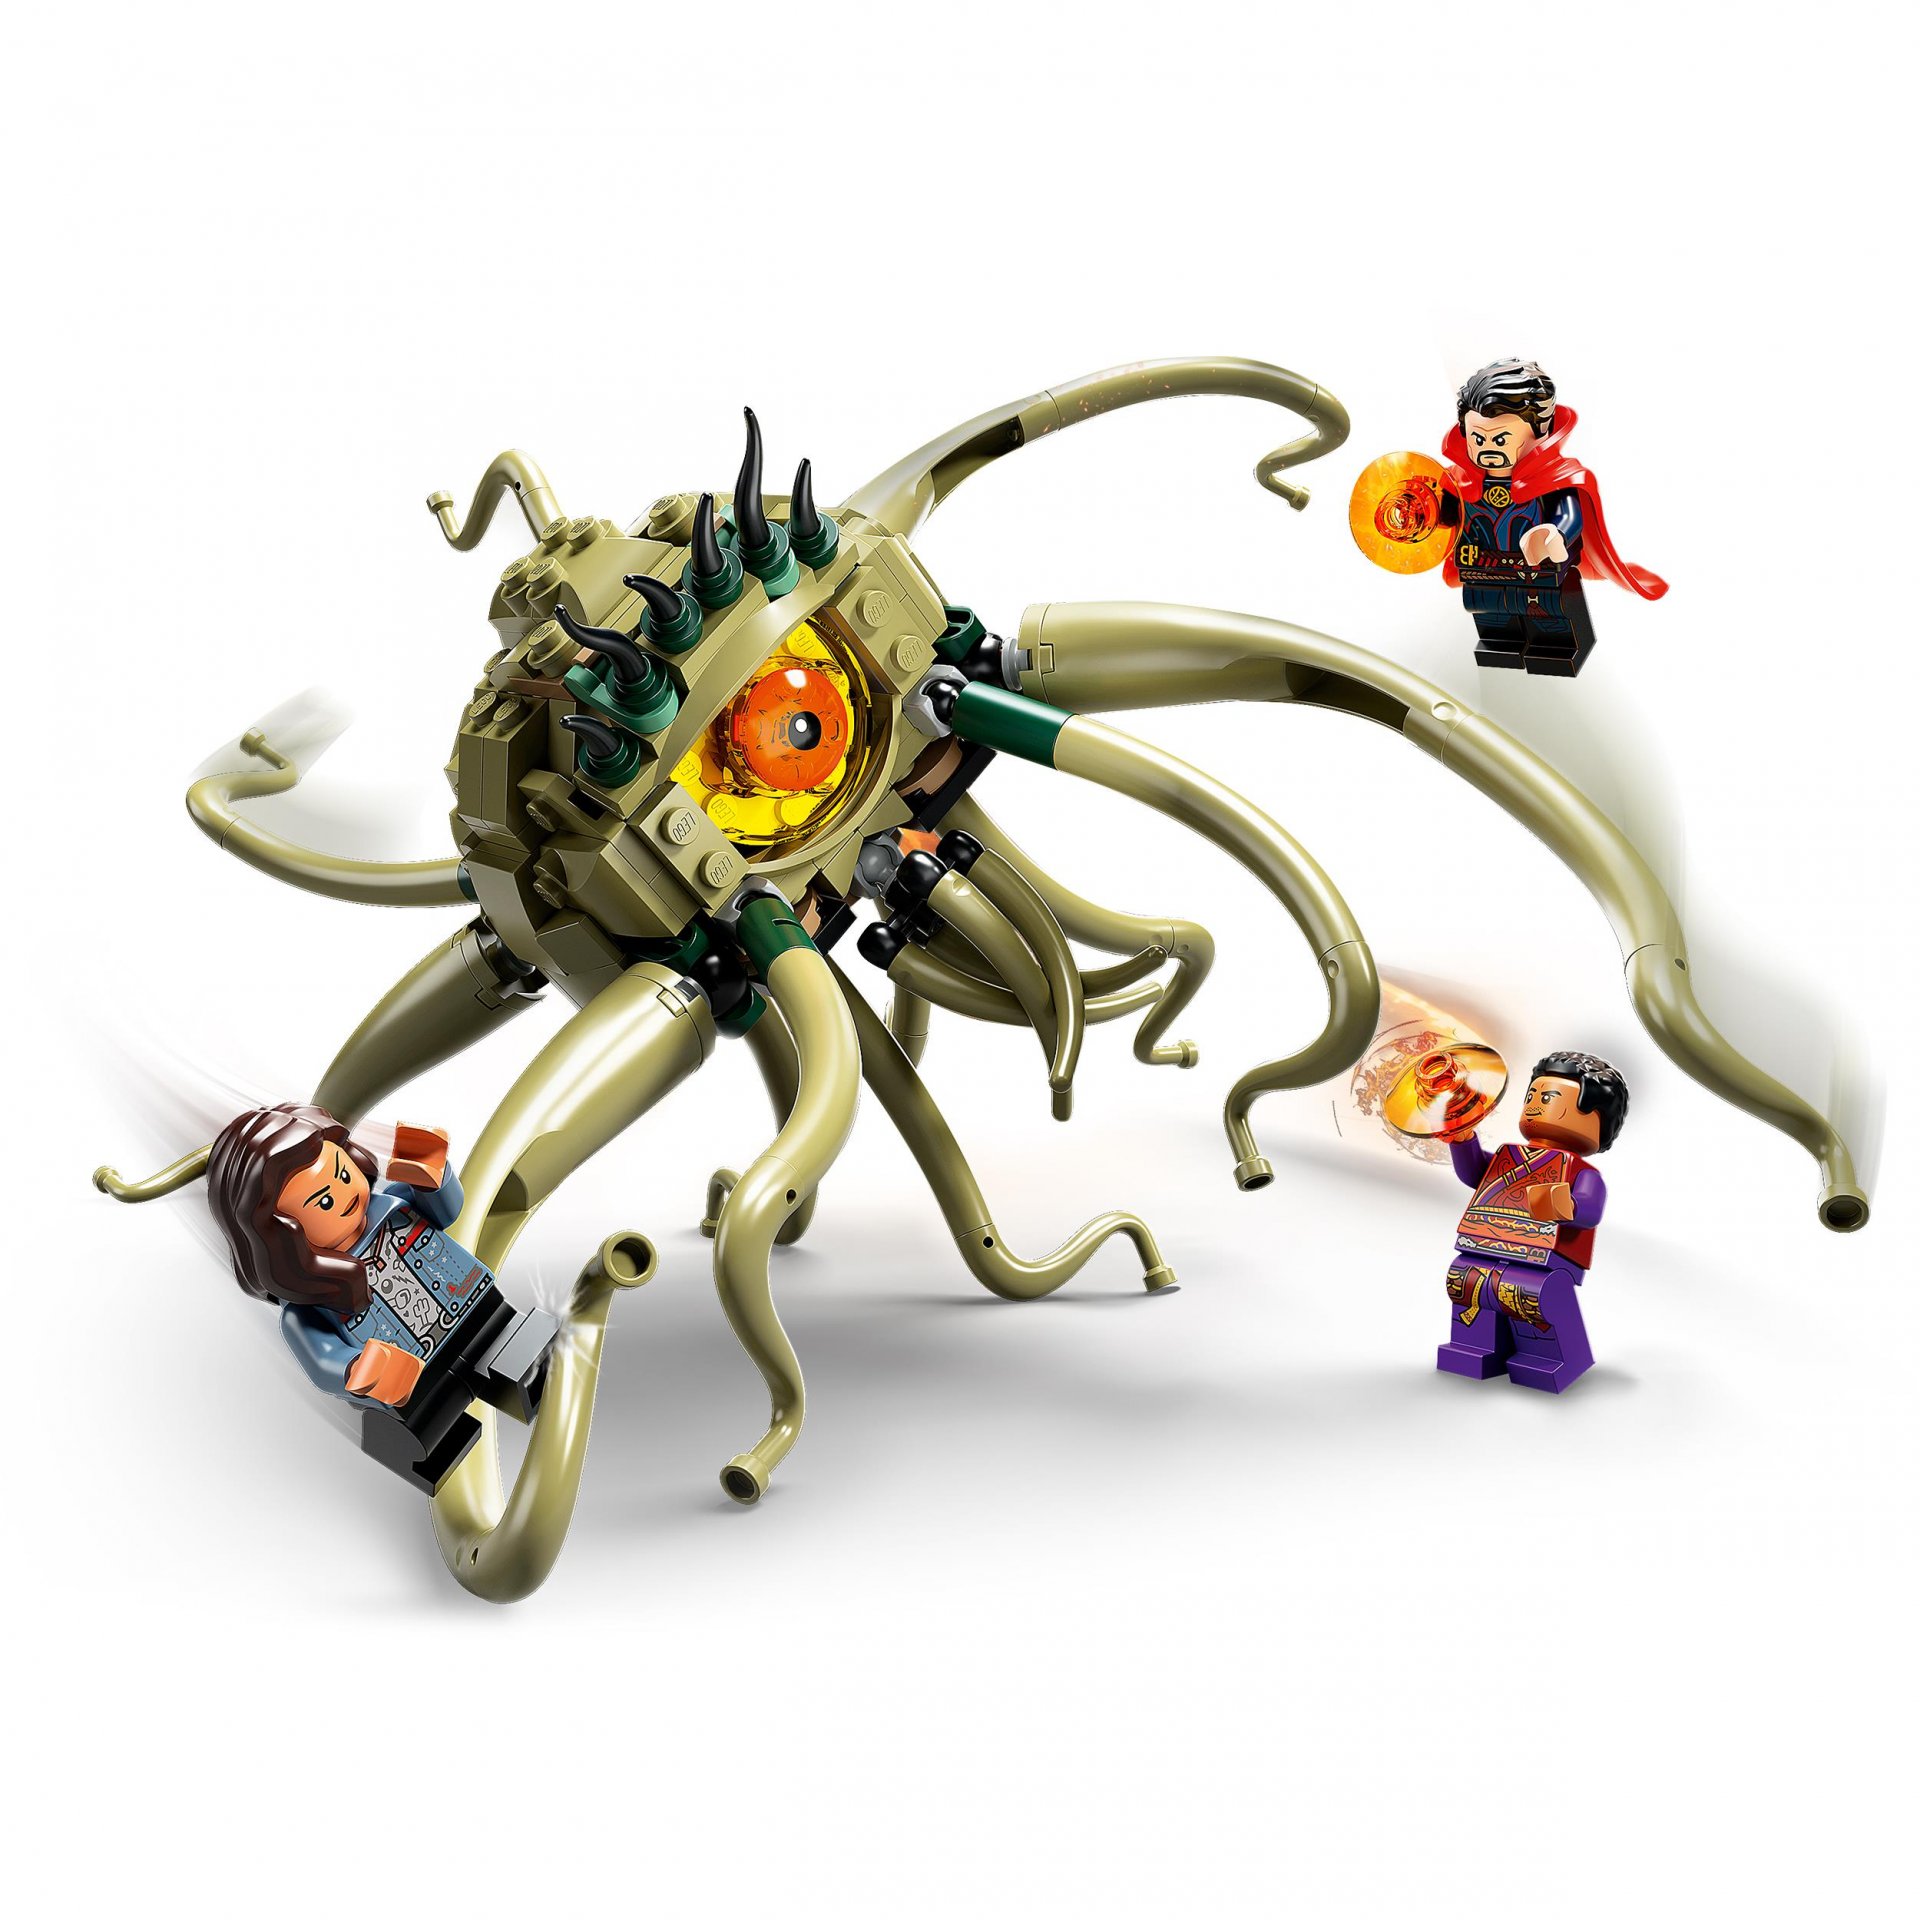 LEGO Marvel Faccia A Faccia con Gargantos, Piovra e Minifigure di Dr Strange, Gi 76205, , large